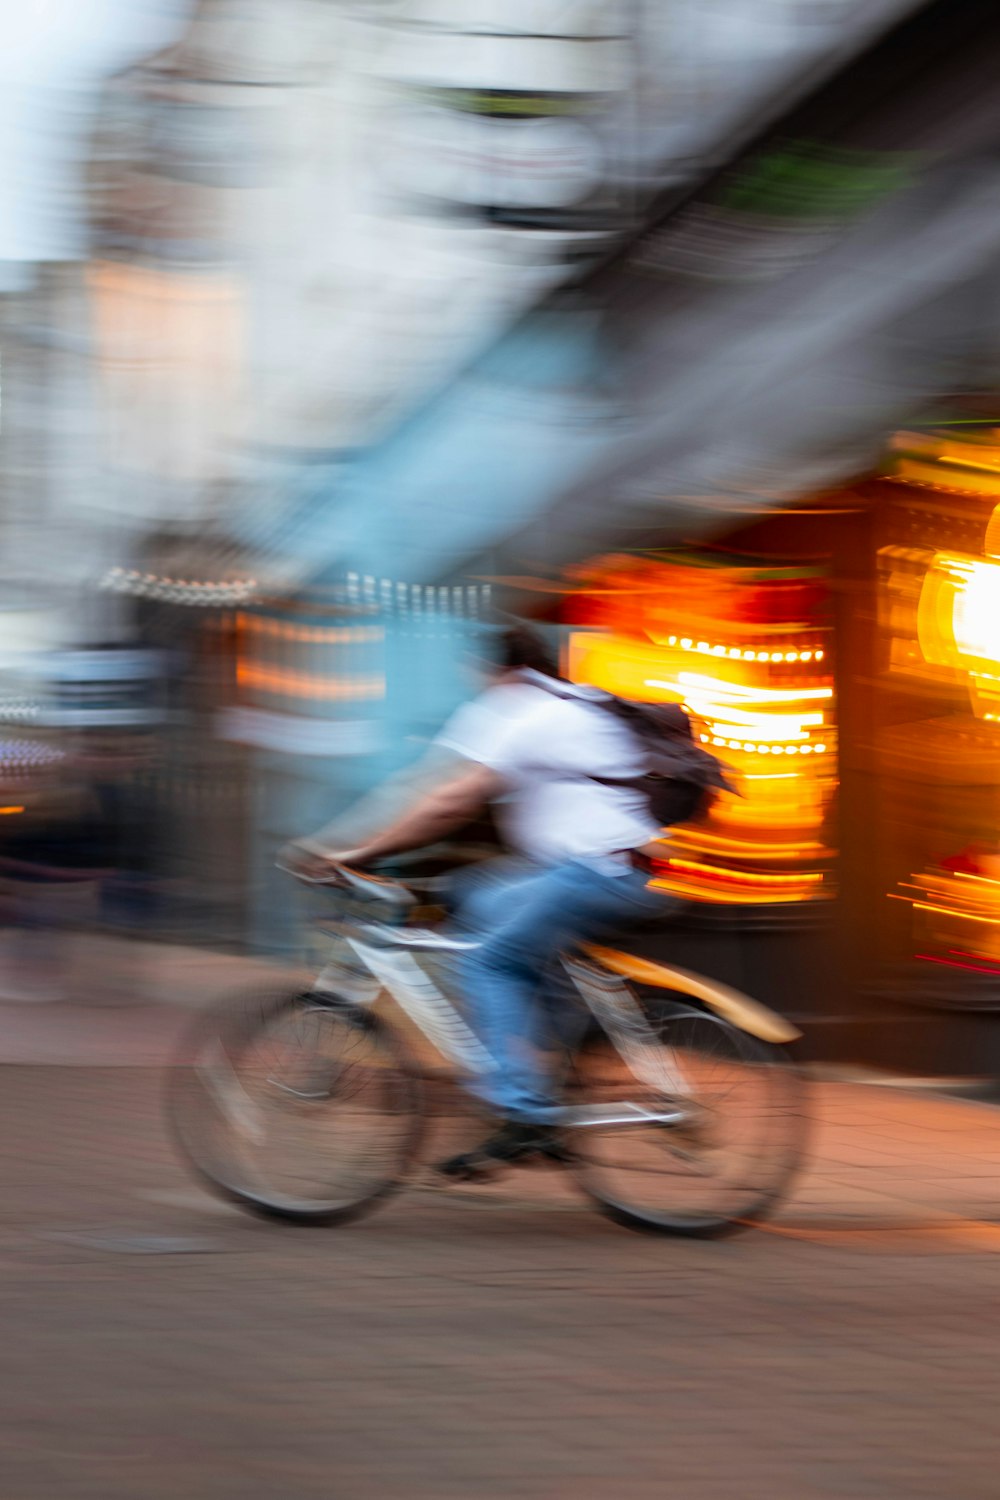 man in white shirt riding bicycle on road during daytime